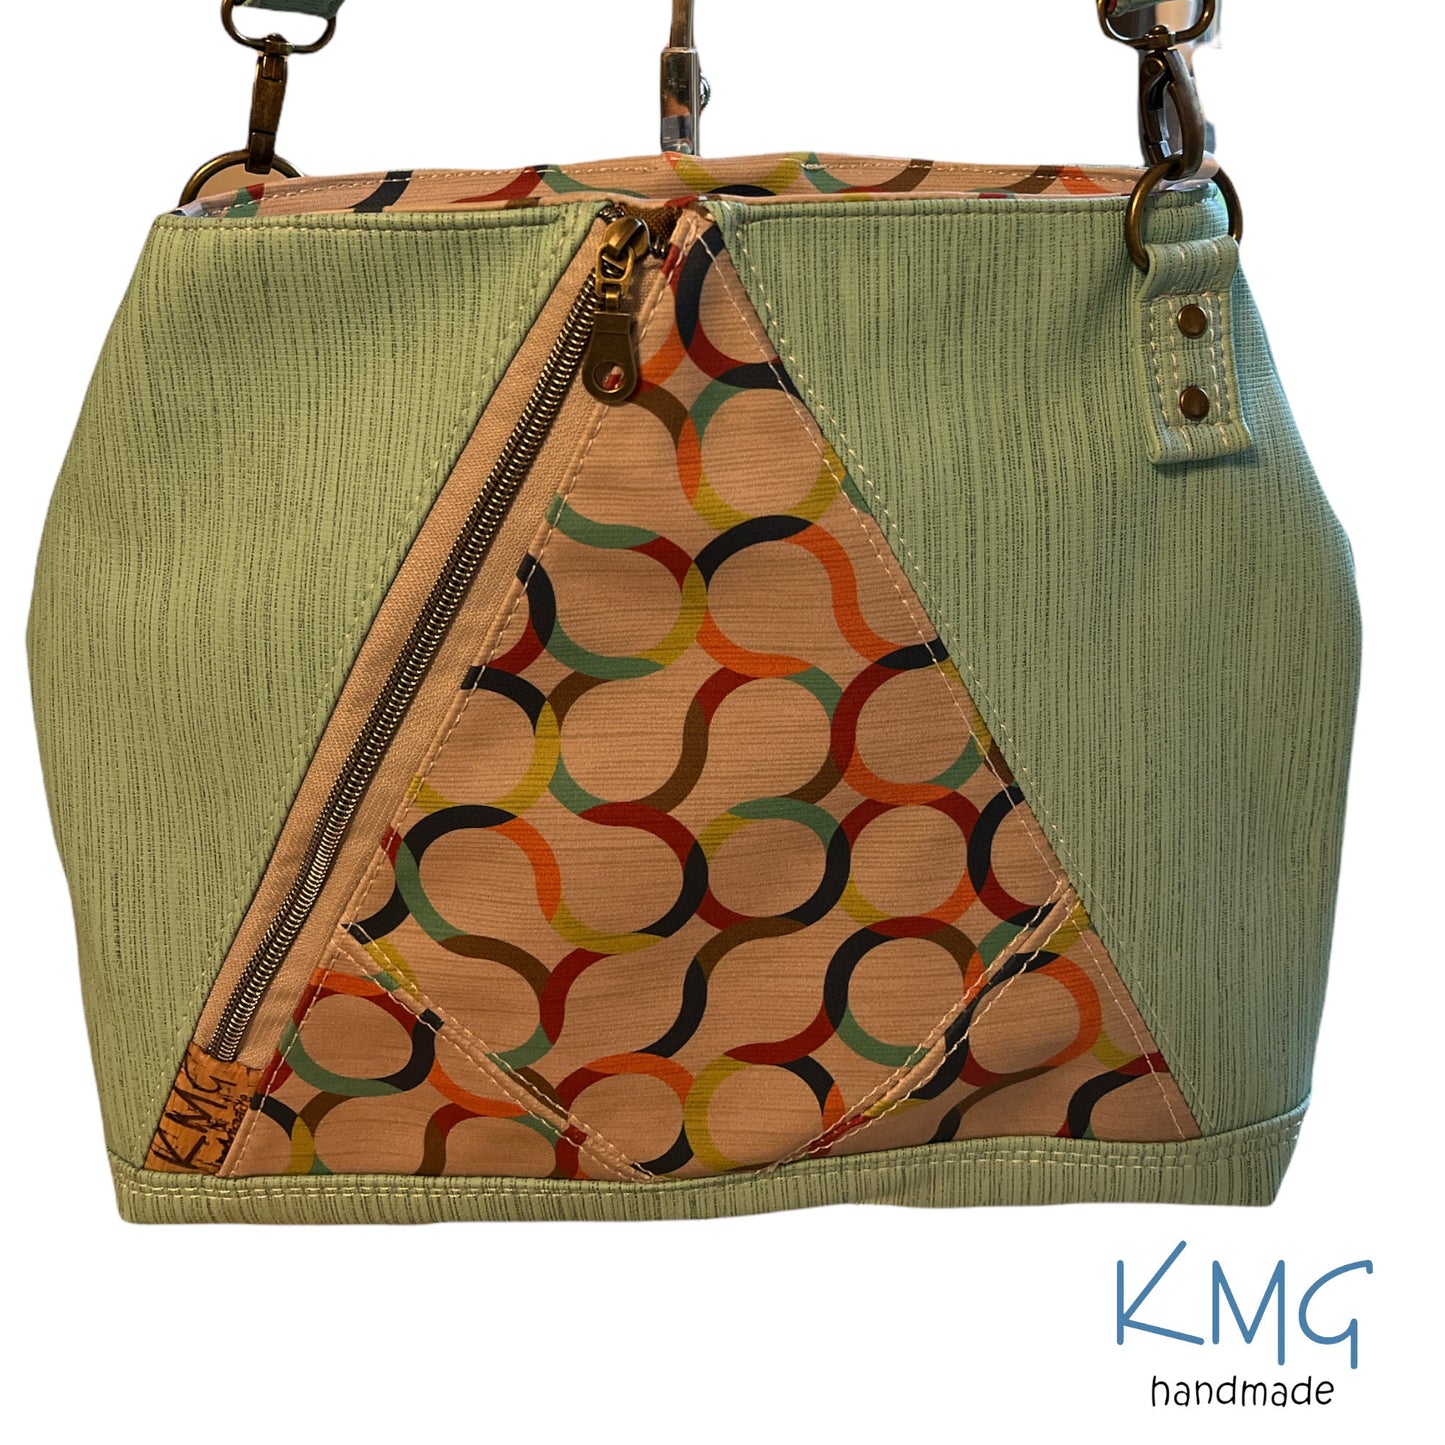 KMGhandmade Original Compass Crossbody Bag - Colorful Circles